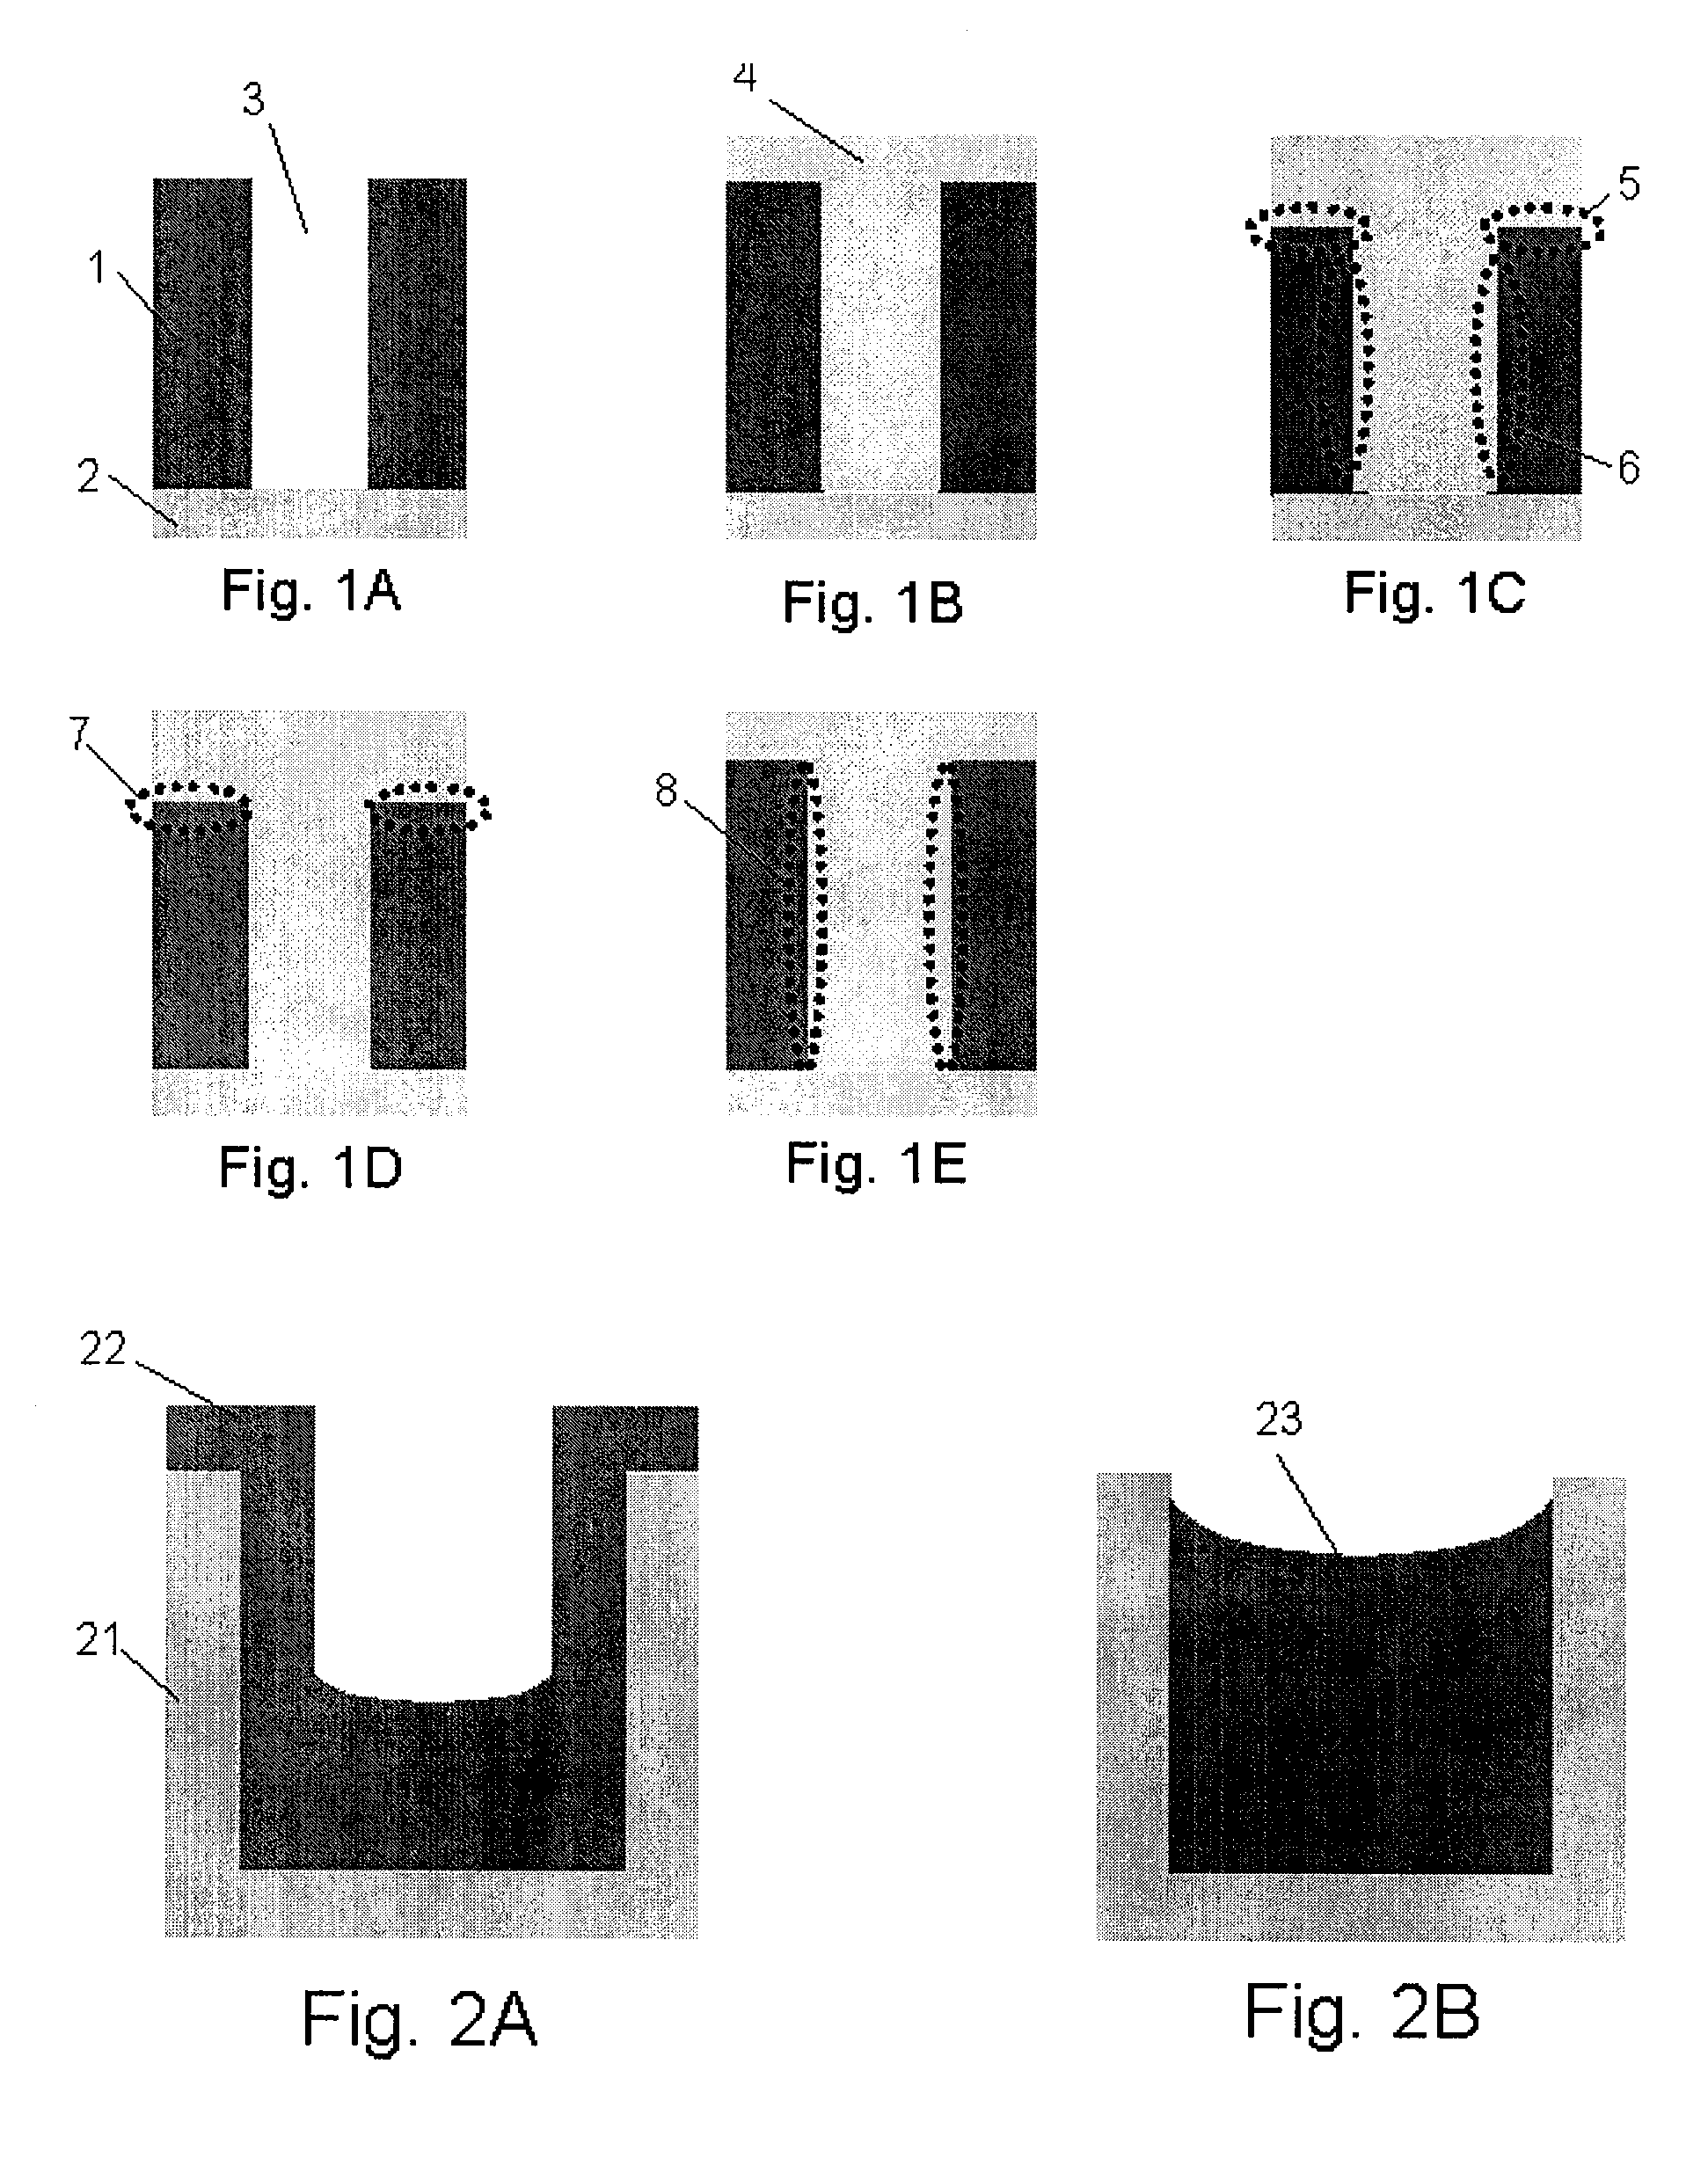 Method for depositing flowable material using alkoxysilane or aminosilane precursor